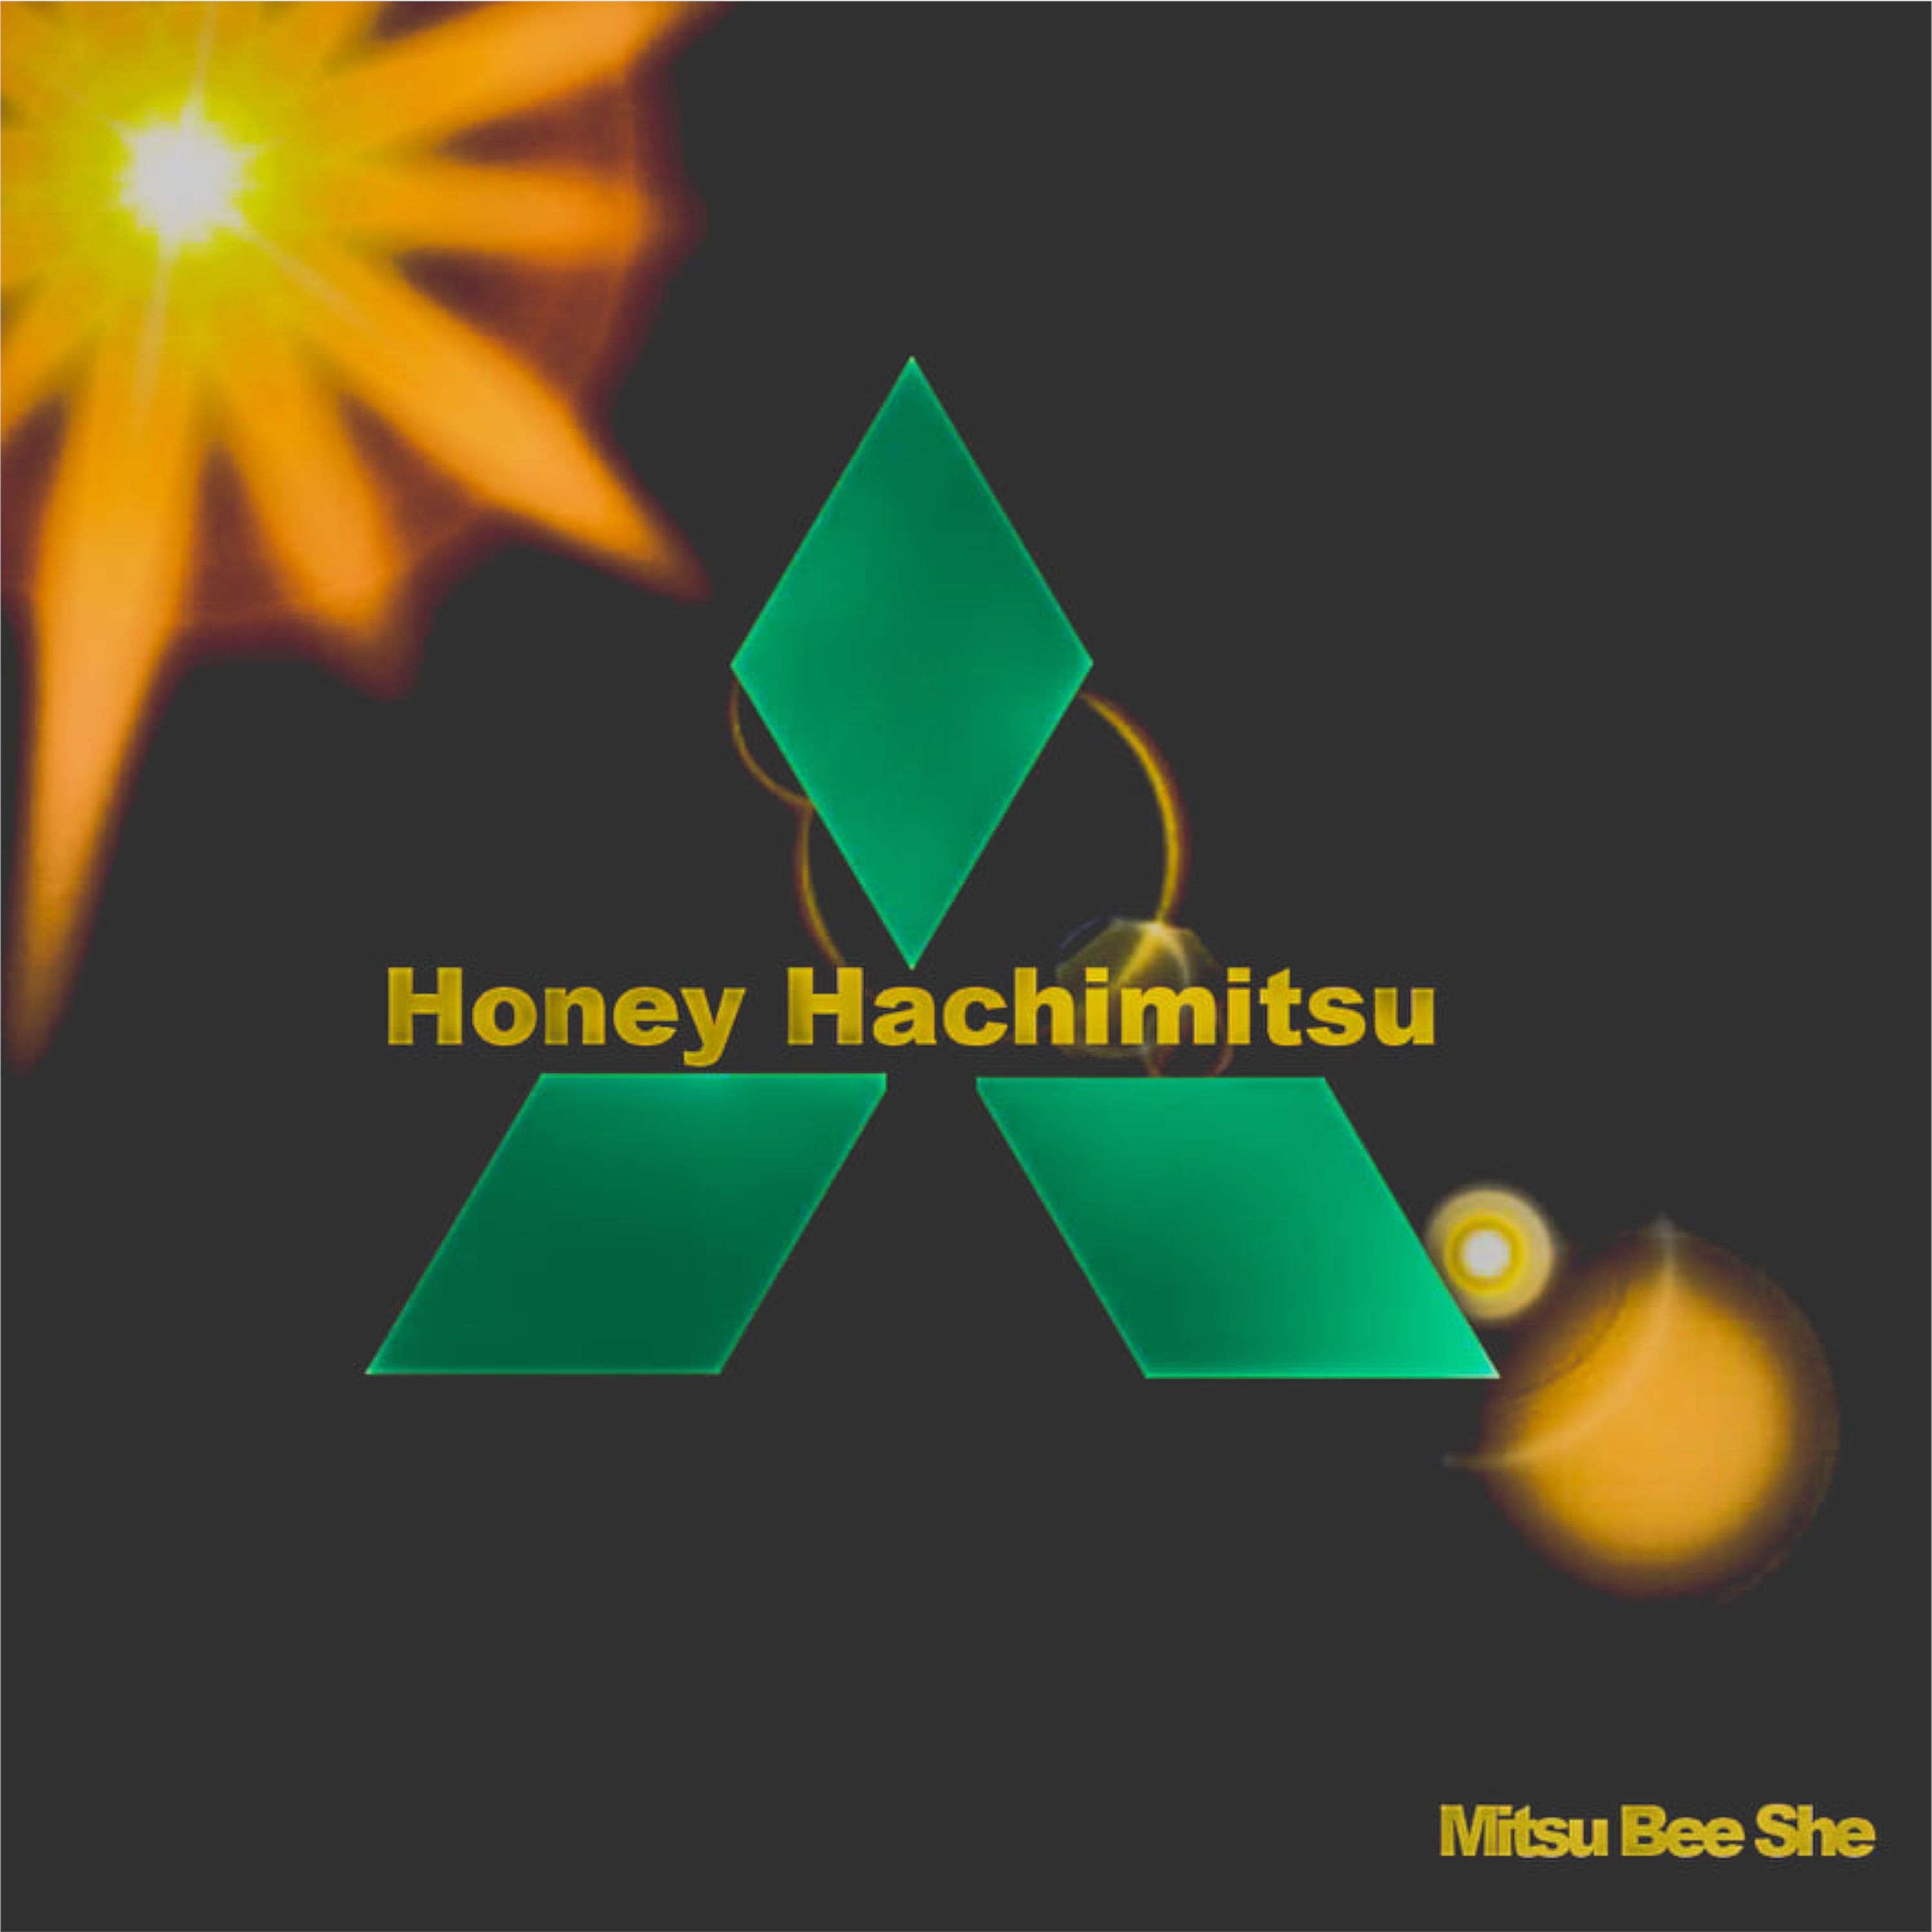 Honey Hachimitsu - Mitsu Bee She front cover